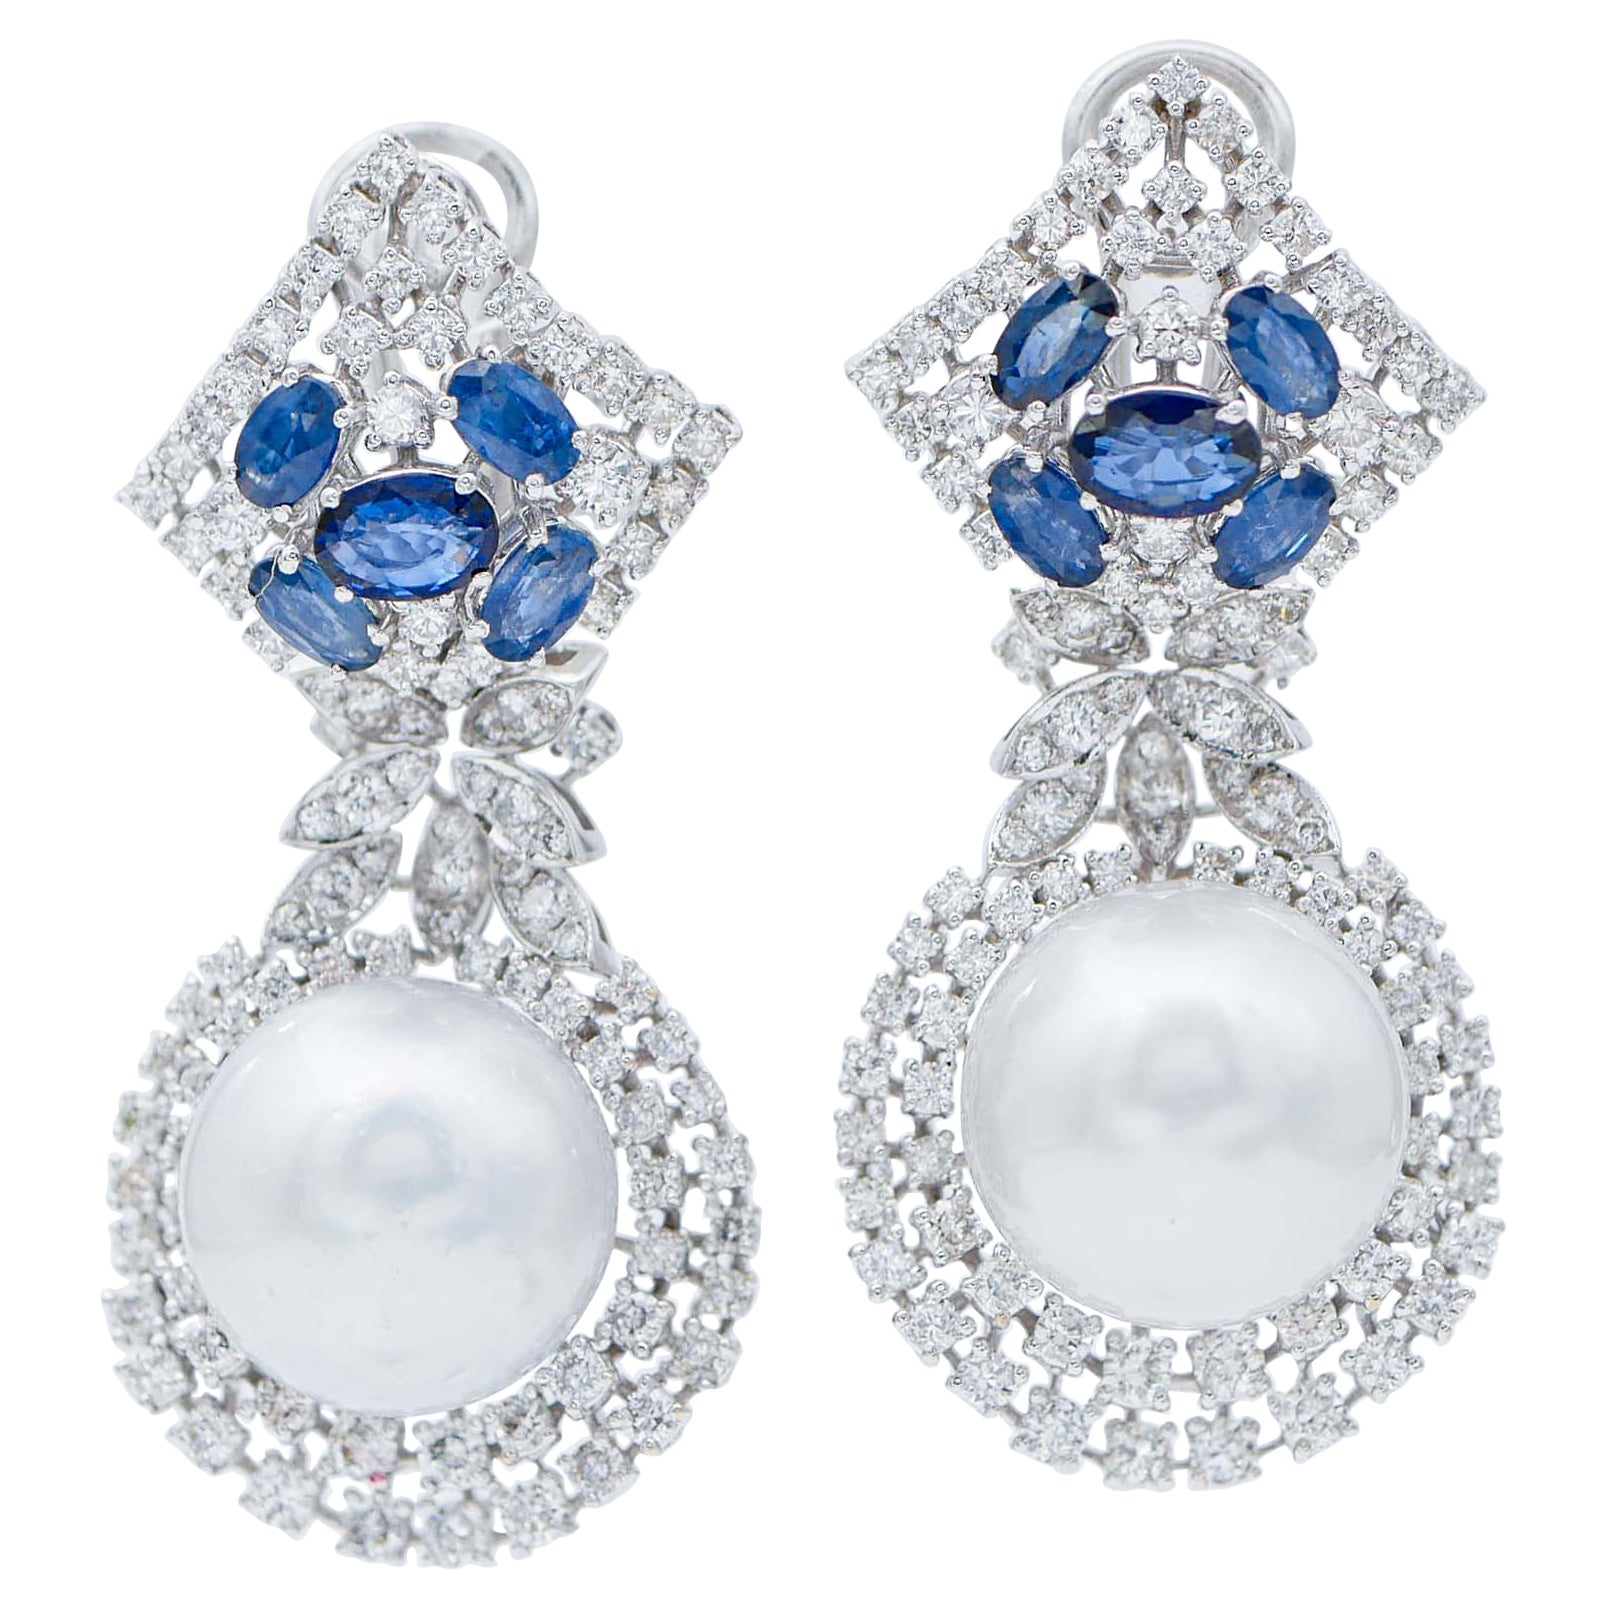 South-Sea Pearls, Sapphires, Diamonds, 18 Karat White Gold Earrings